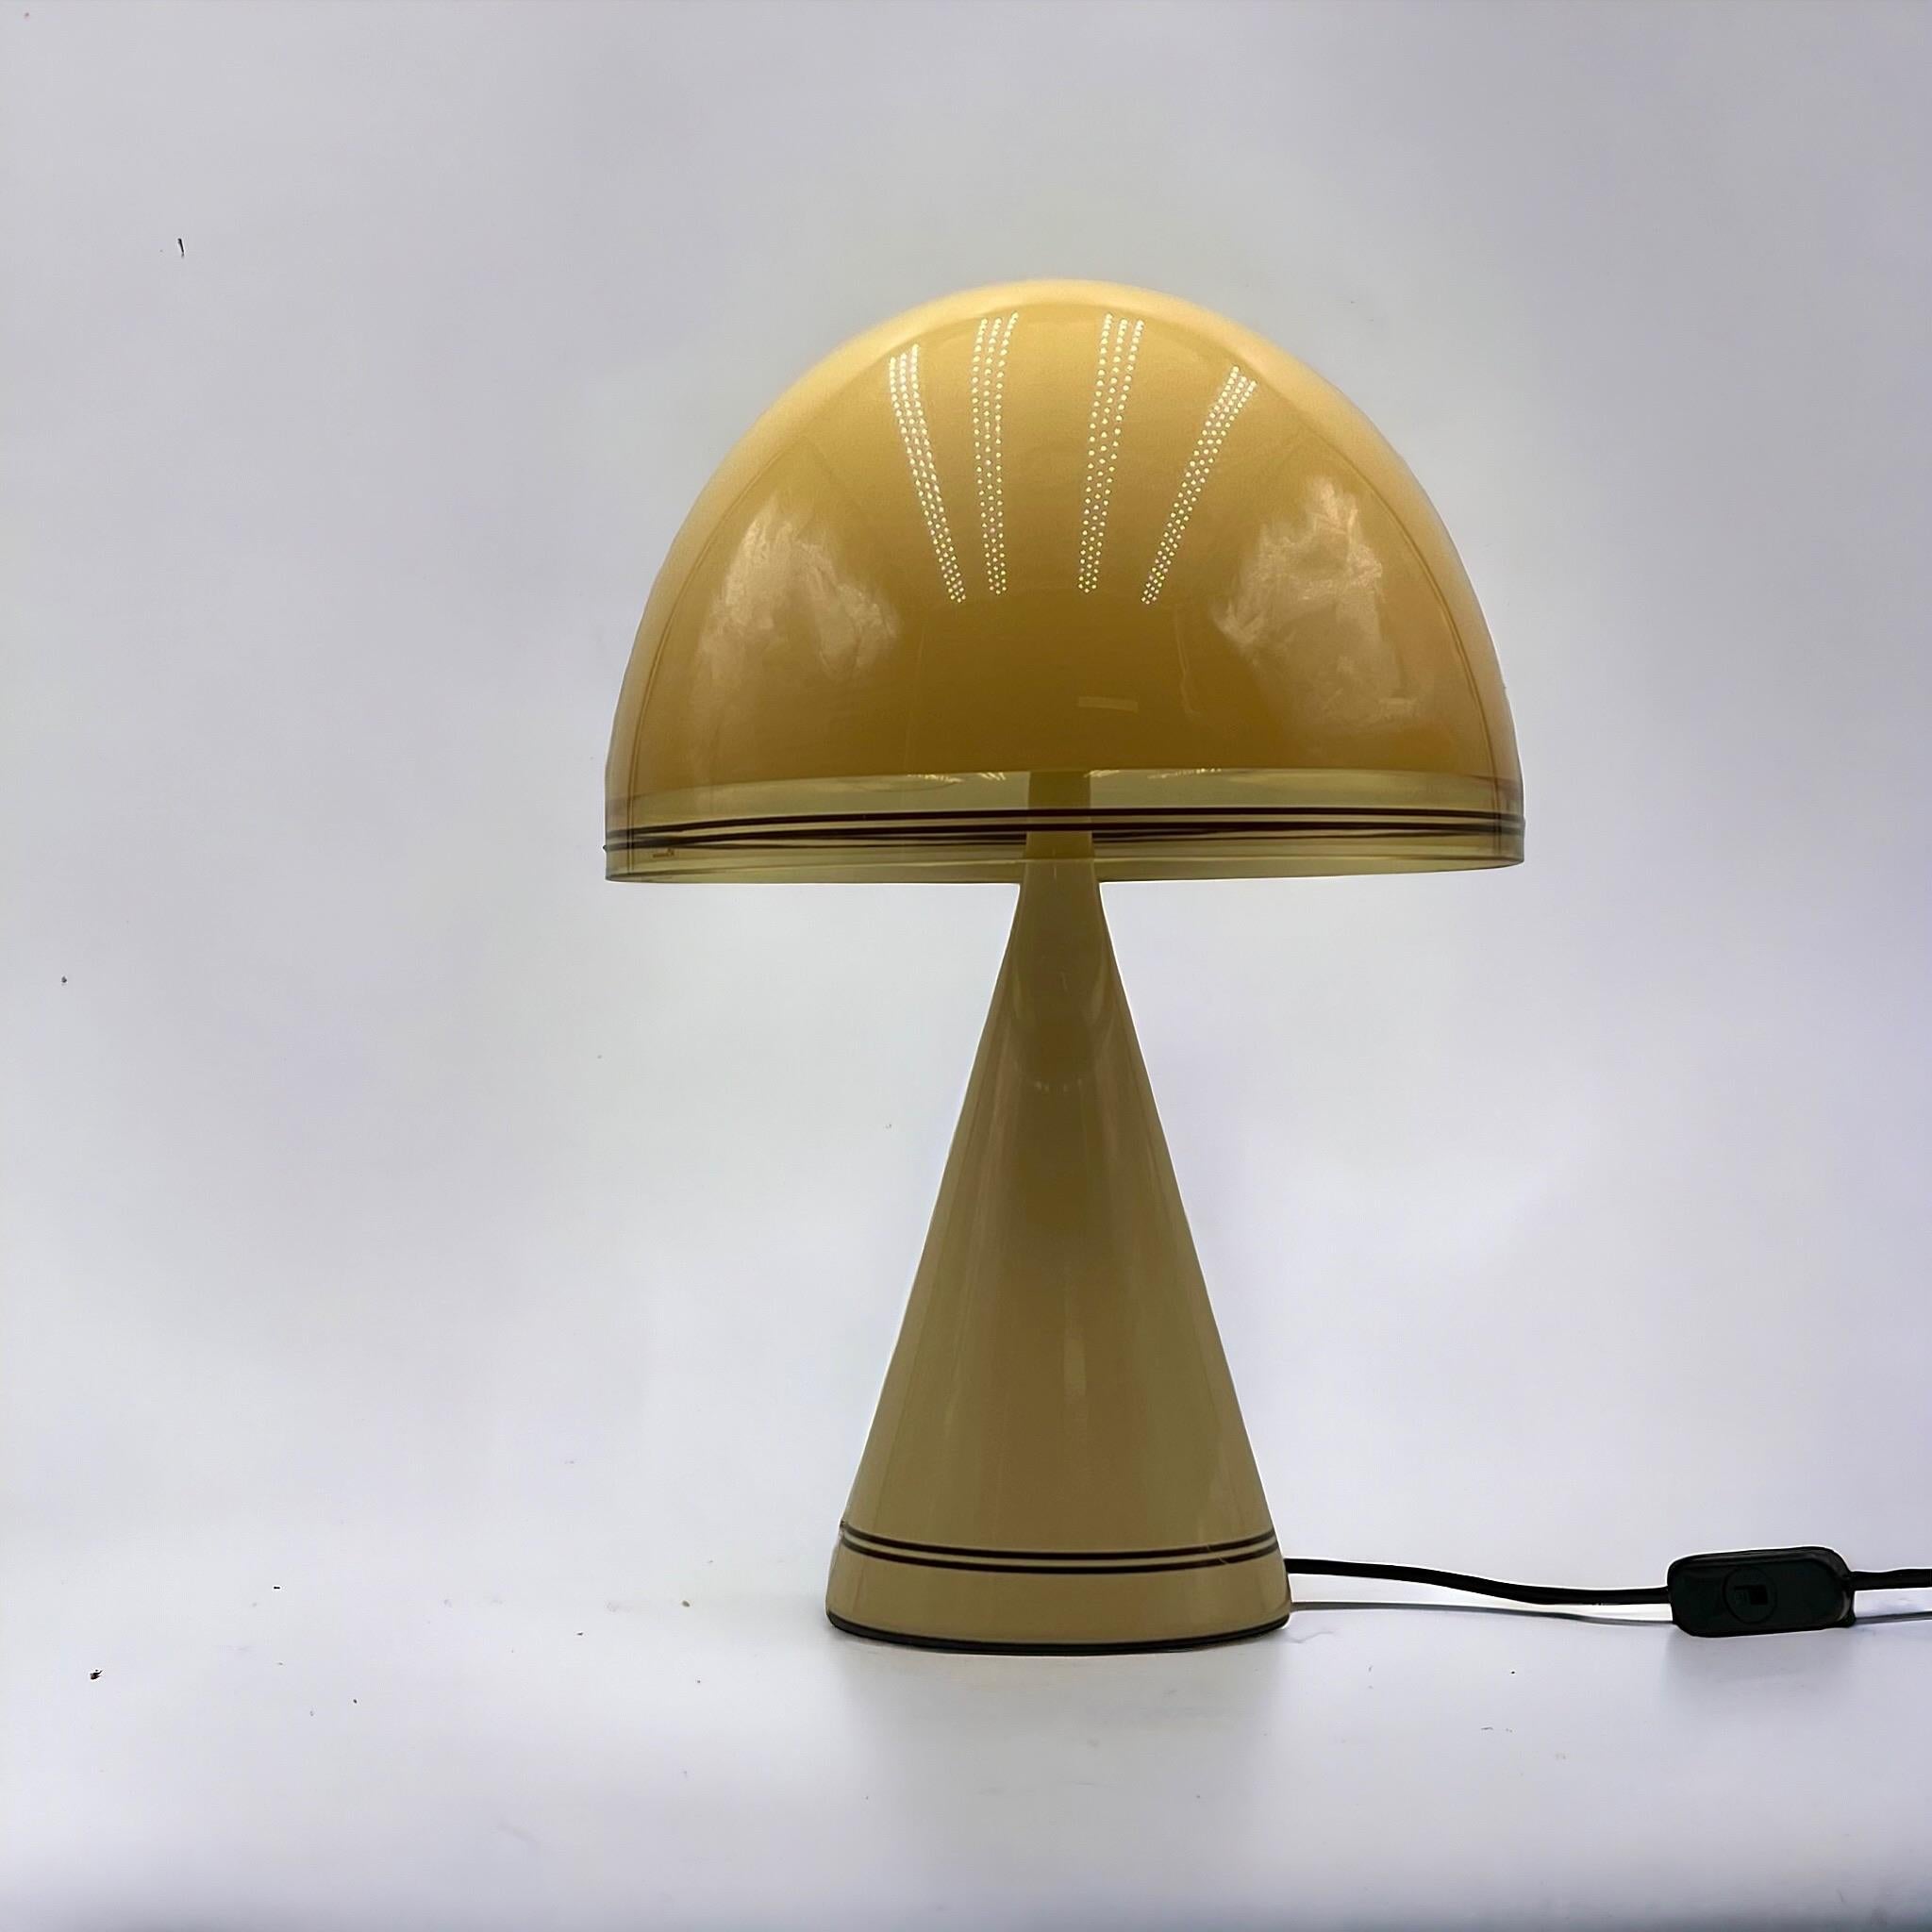 Industrial Iconic Mushroom 70s Lamp ‘Baobab’ by iGuzzini - Italian Space Age Iconic Lamp